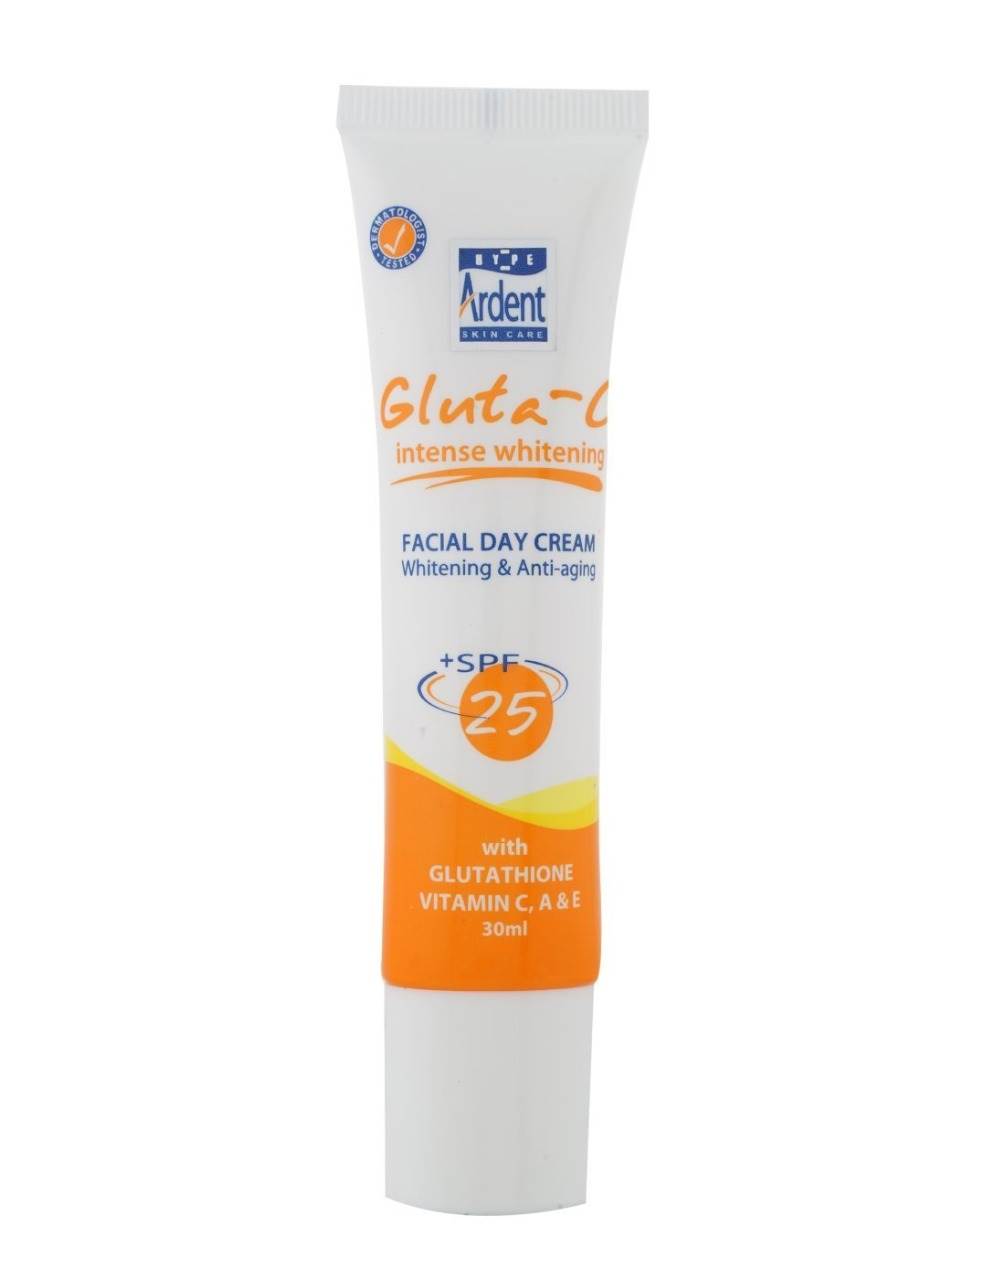 Gluta-C Intense Whitening Facial Day Cream whitening With Anti-Aging SPF 25